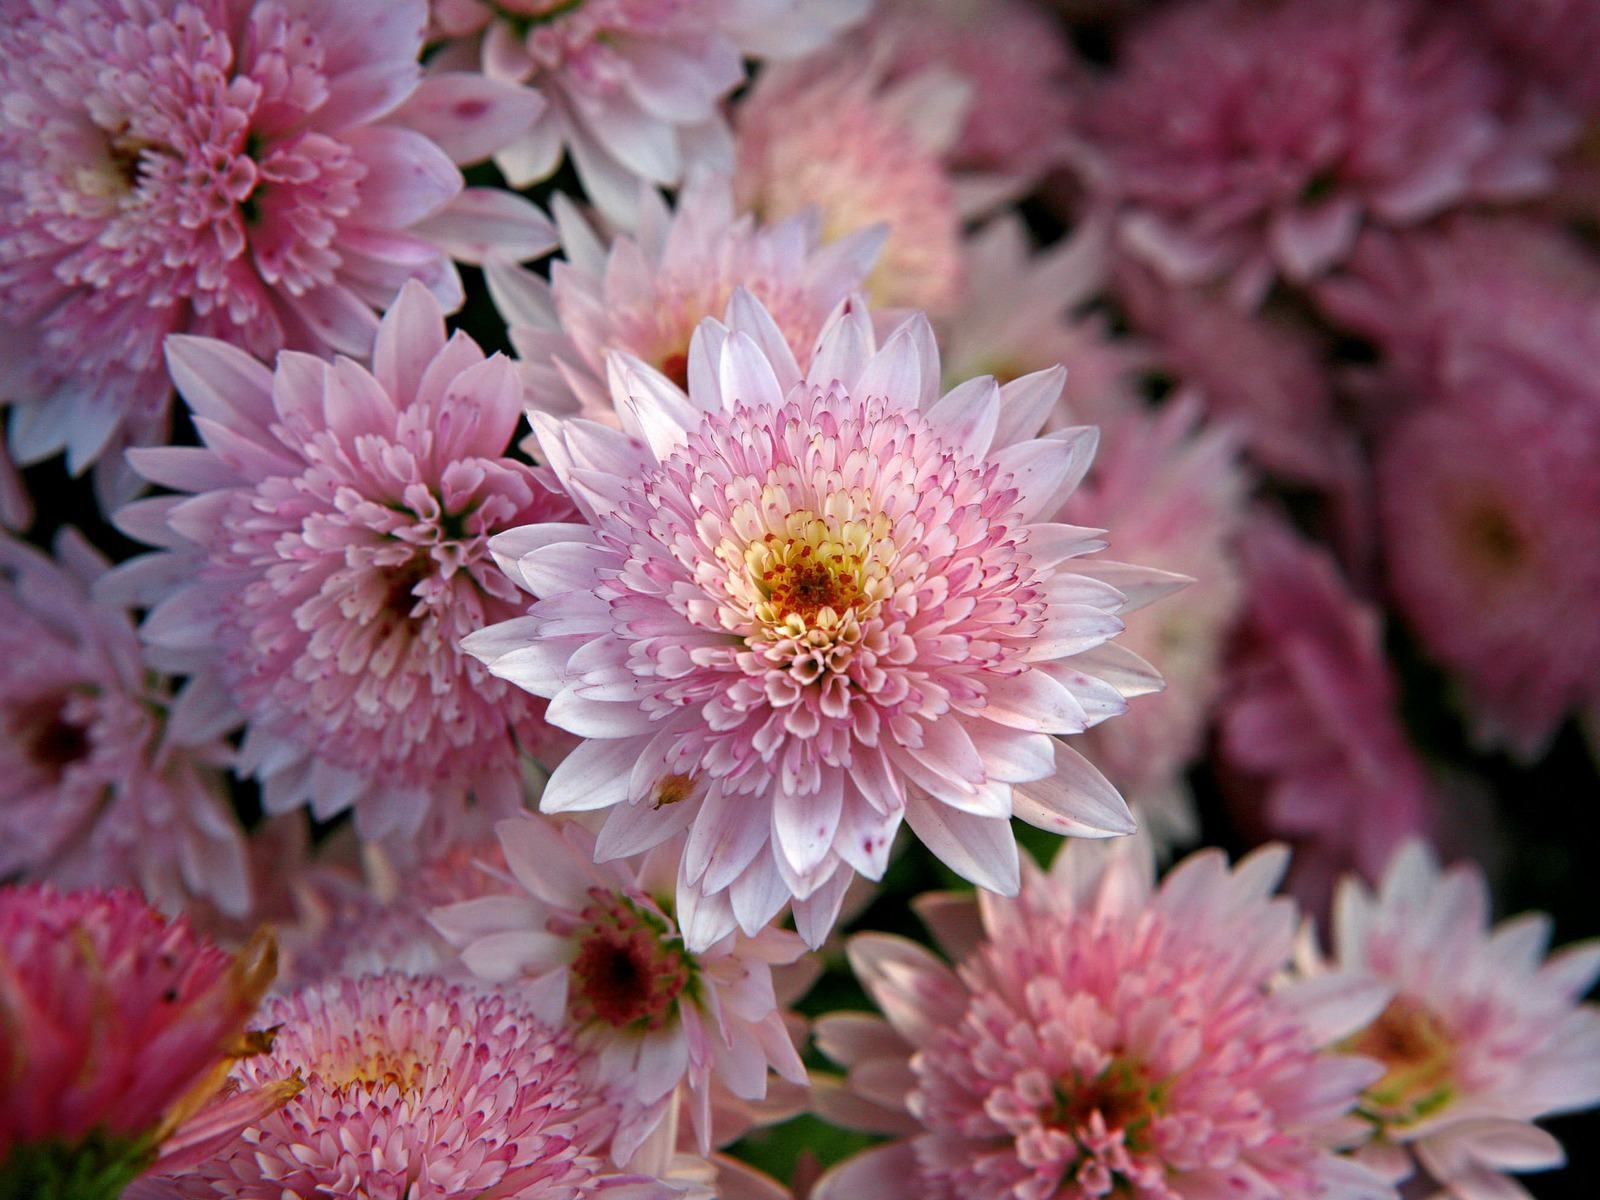 Aster rosa de flores pequeñas